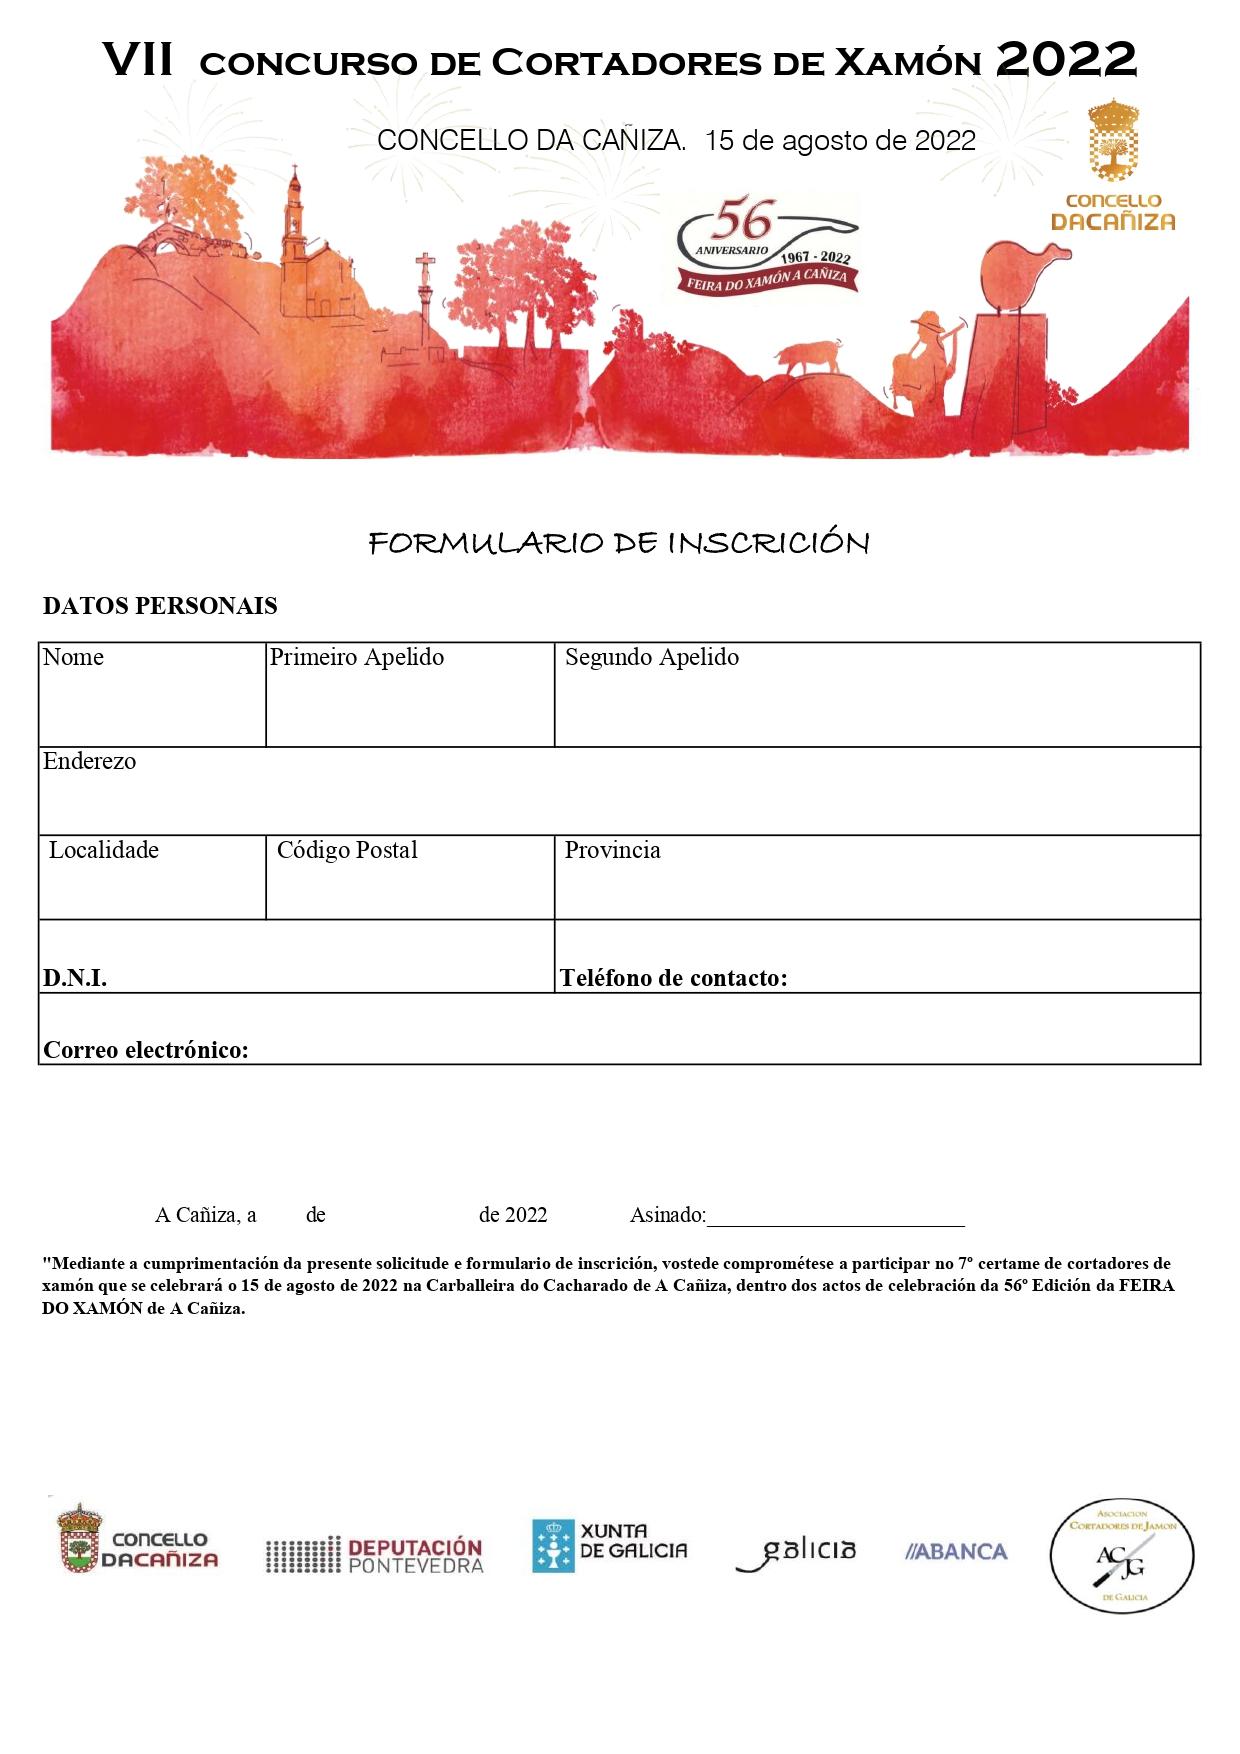 Boletín de inscripción en el VII Concurso de Cortadores de Jamón de A Cañiza. 15 de agosto de 2022